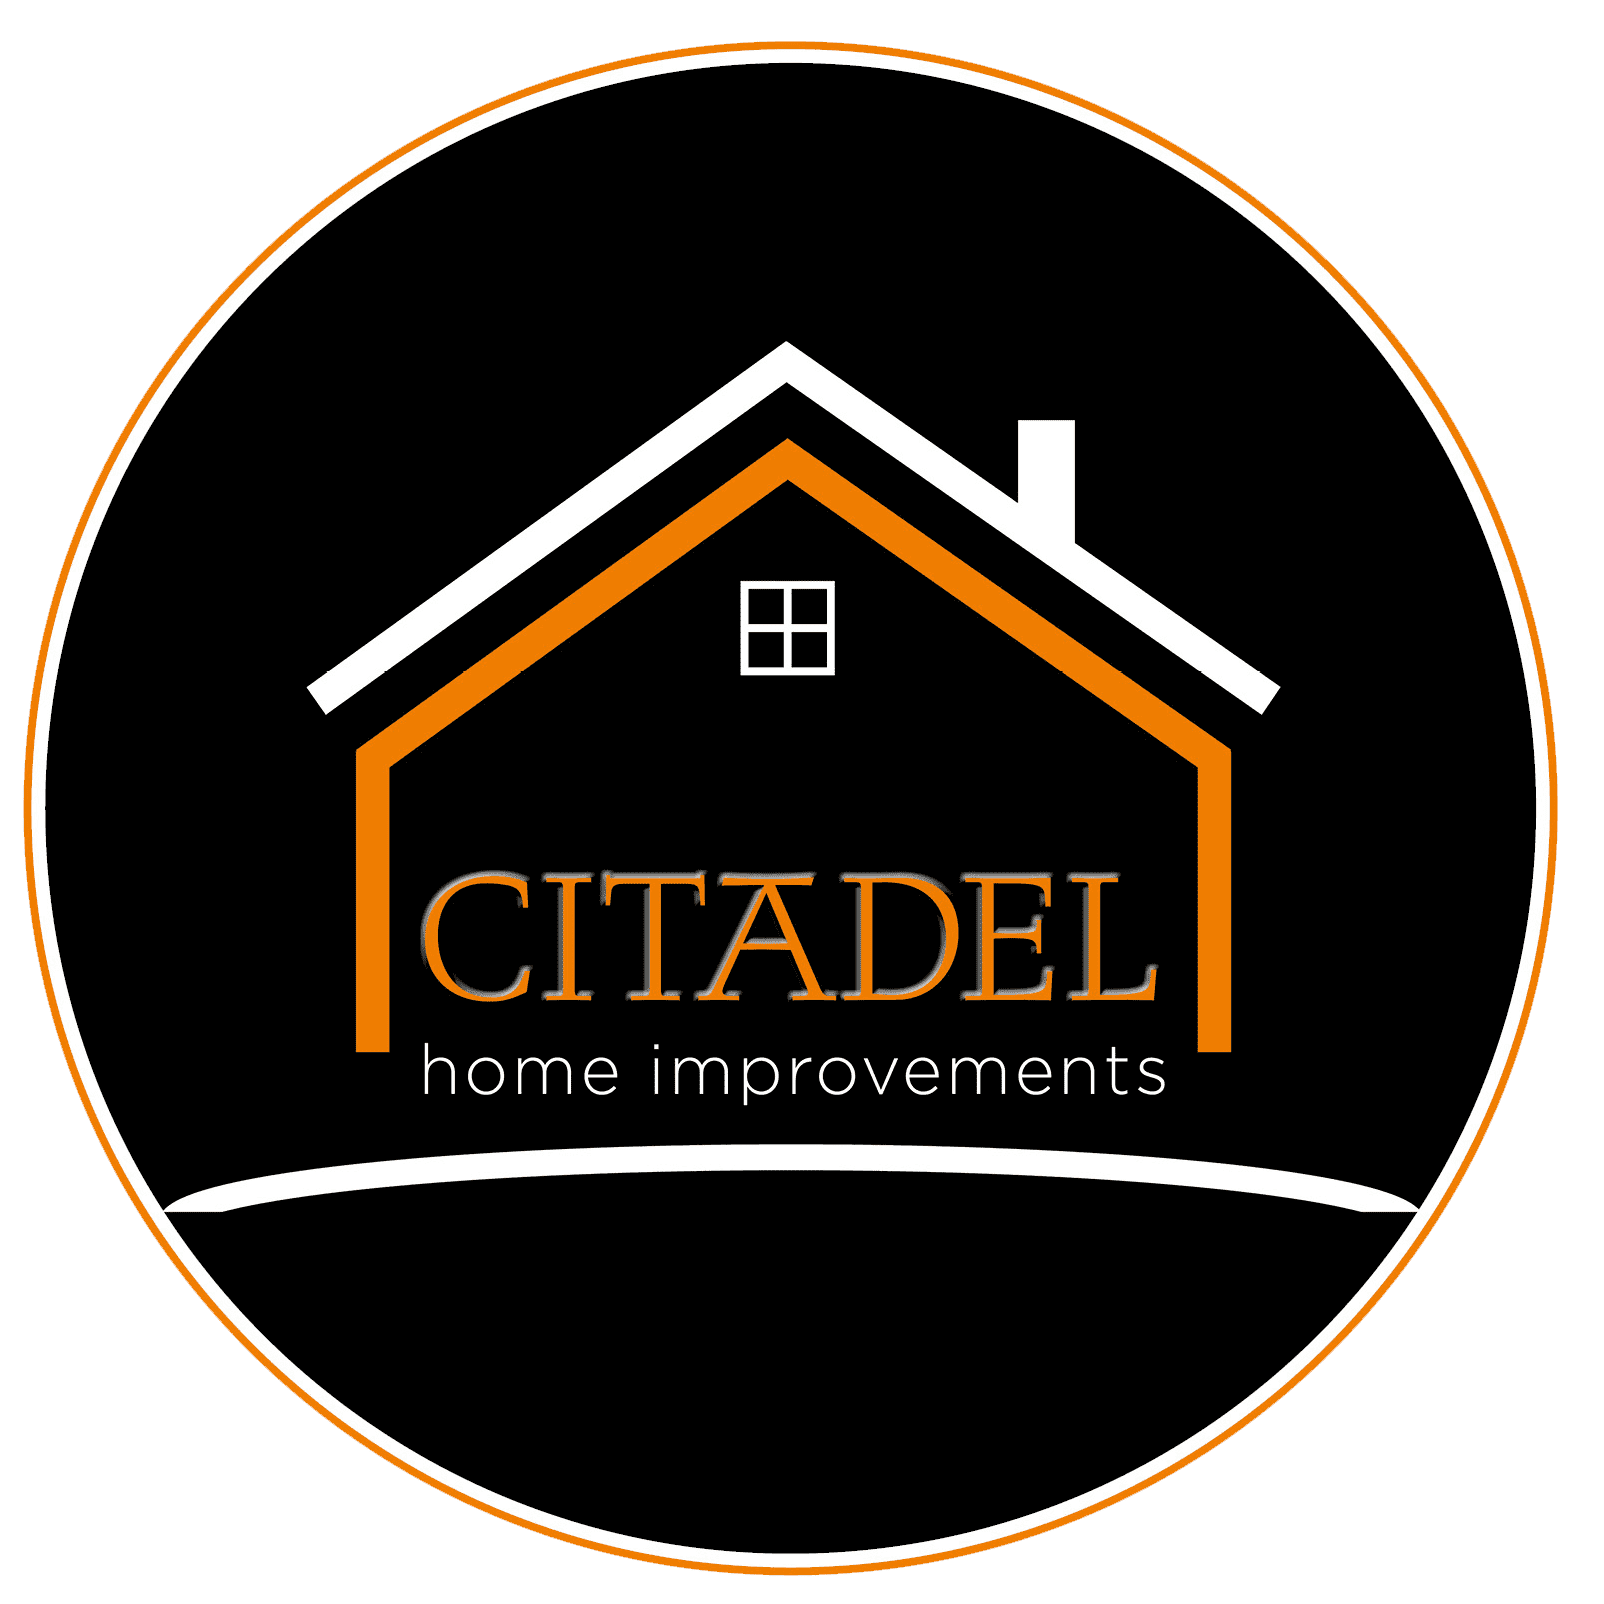 Citadel Home Improvements - First Class Window Istallation Service